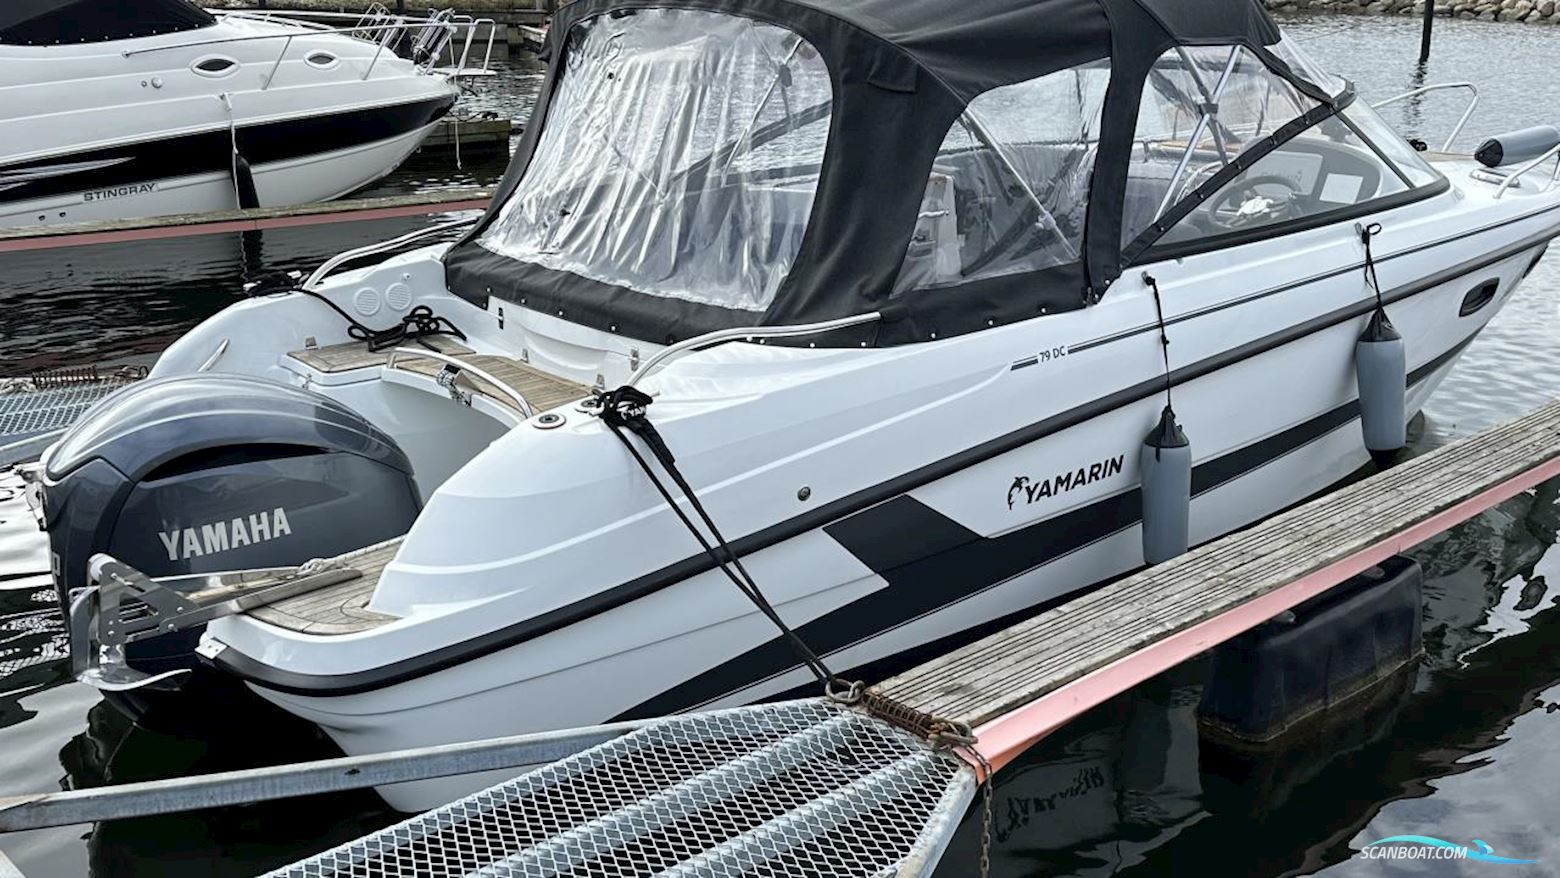 Yamarin 79 DC Motor boat 2022, with Yamaha engine, Sweden